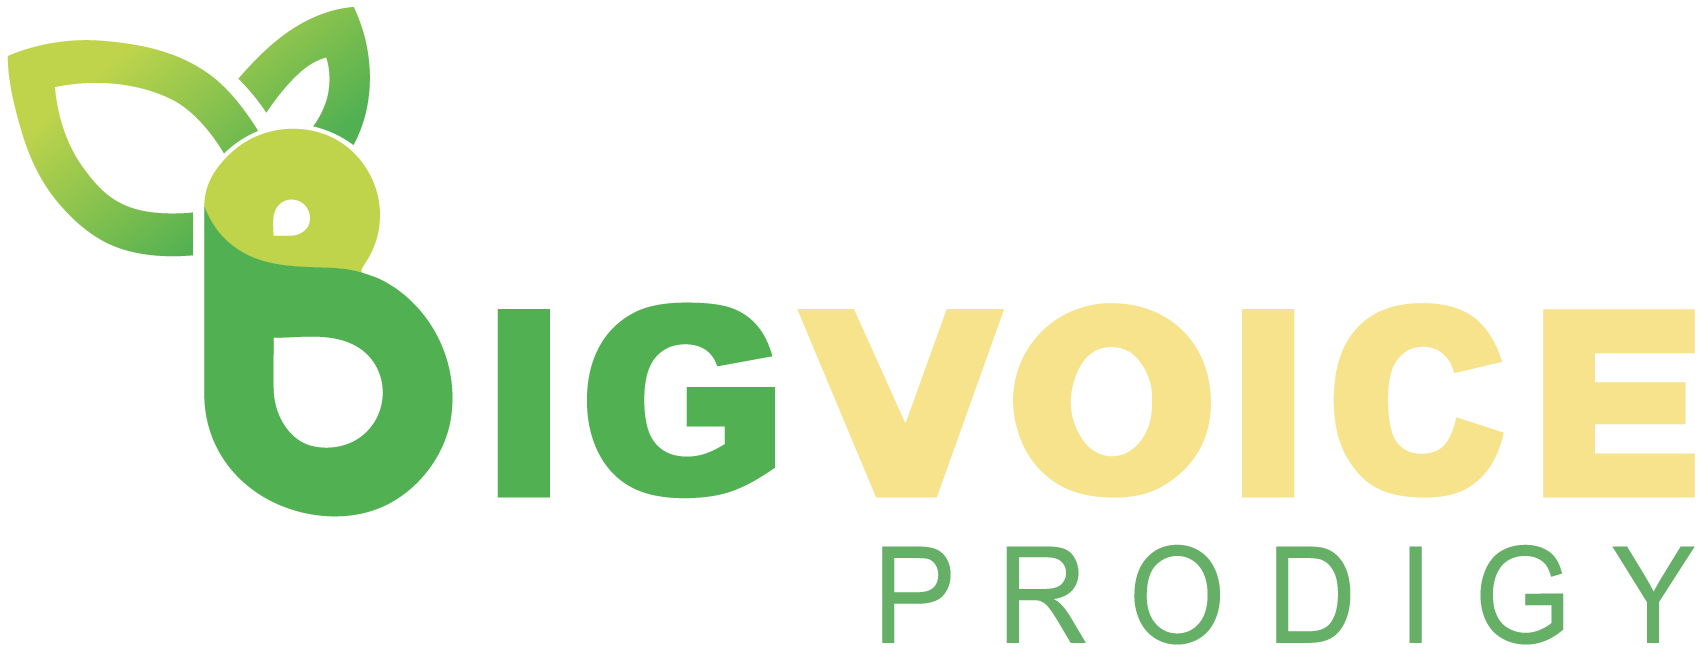 Bigvoice Prodigy Renovations & Disposal Services Pte. Ltd. logo